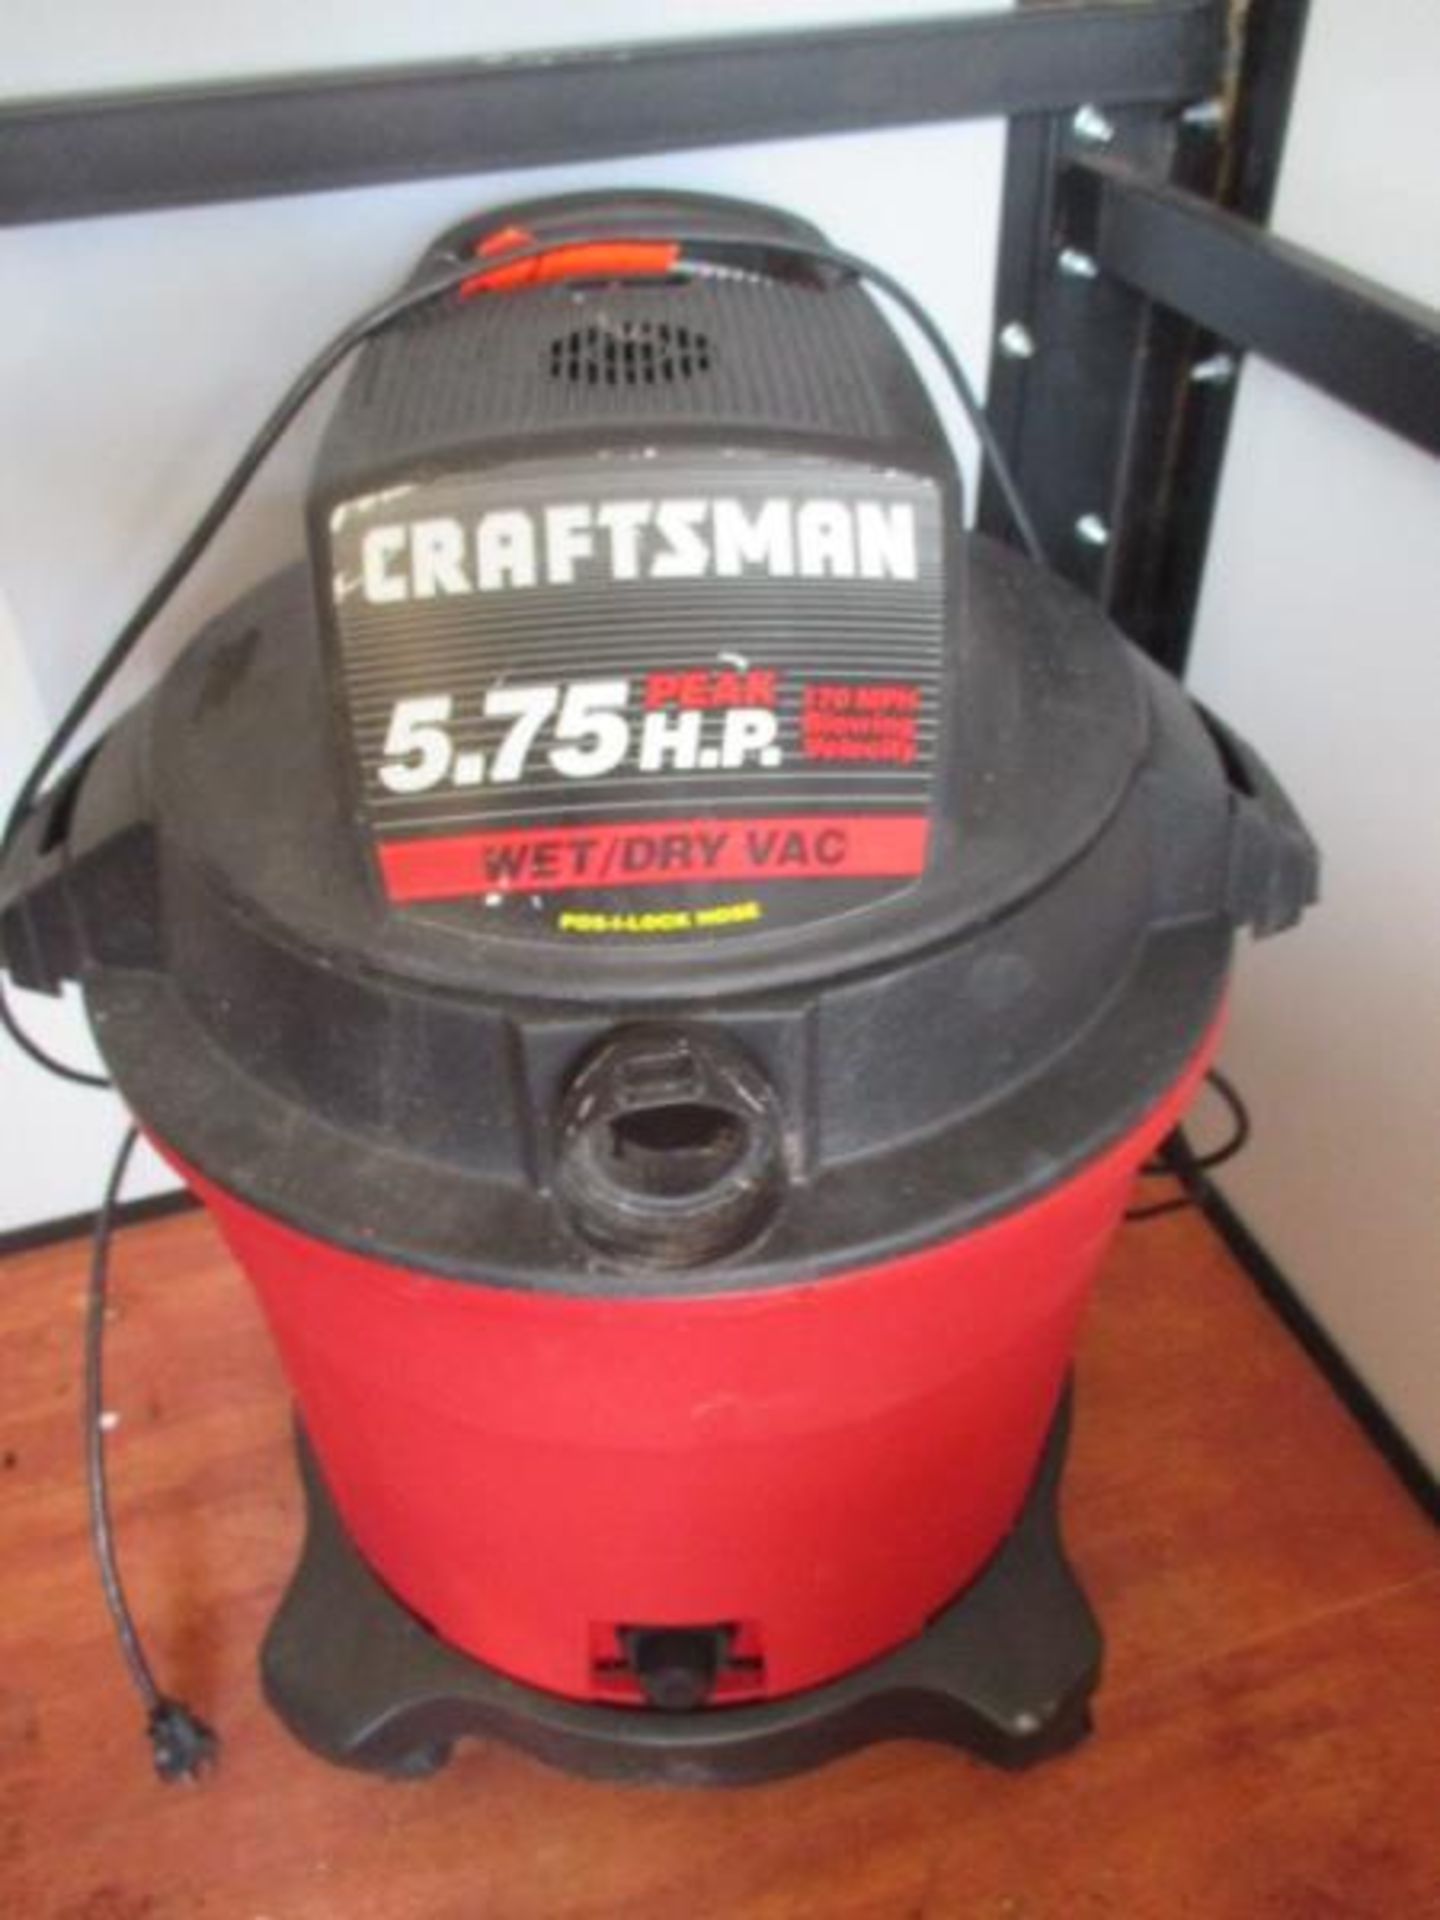 Crafsman Wet / Dry Vac, 16 Gallon, 5.75 HP, 170 Blower MPH, No Hose Blower MPH, No Hose